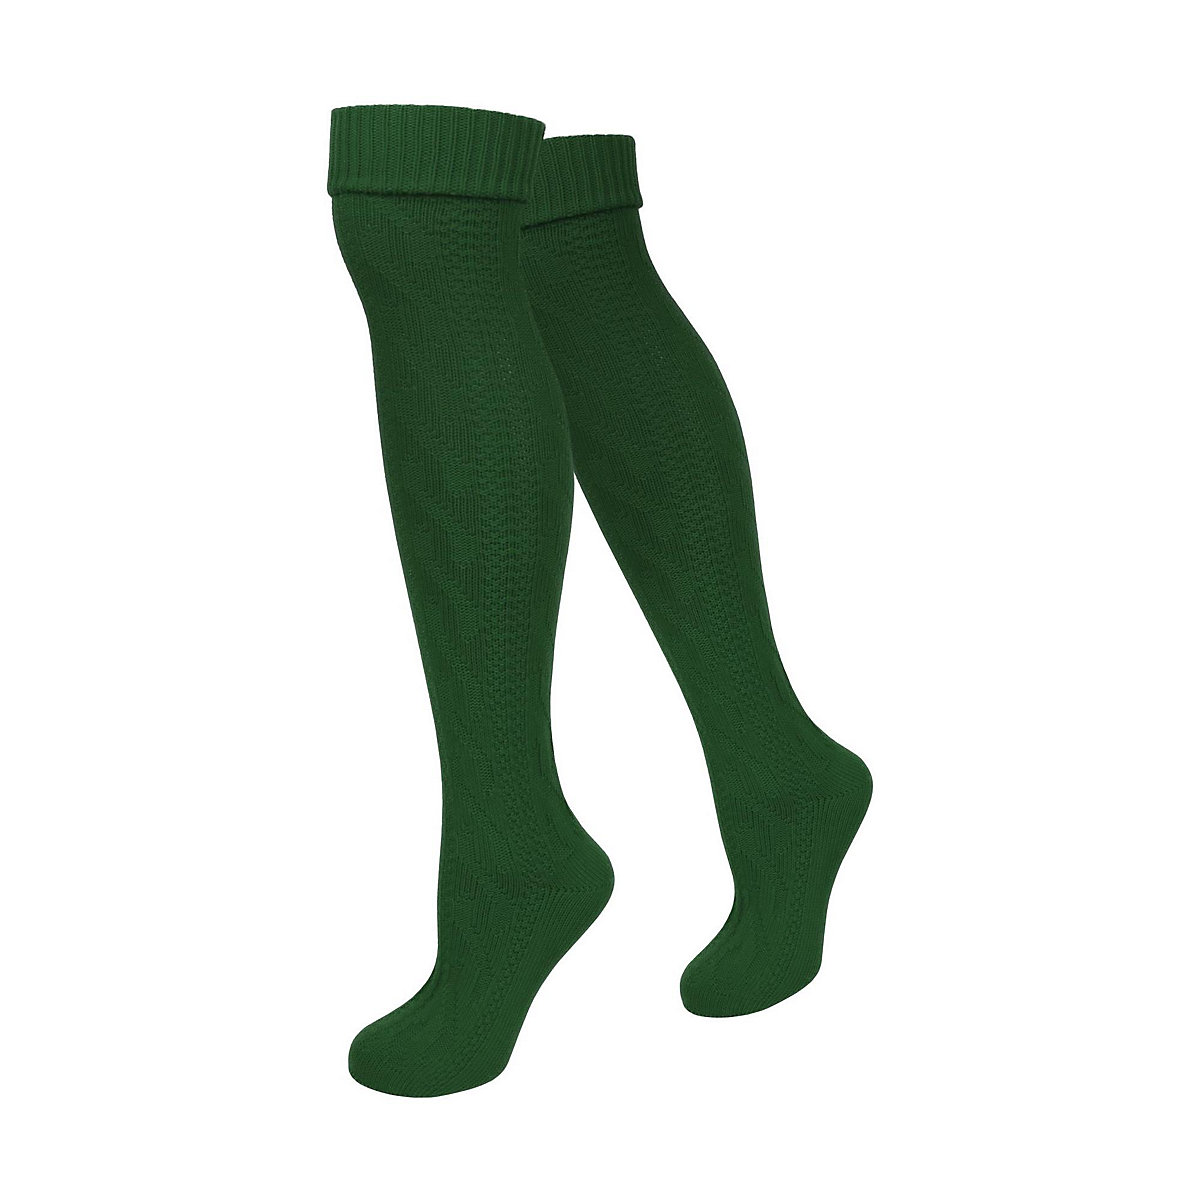 normani® Trachten-Kniestrümpfe Socken grün